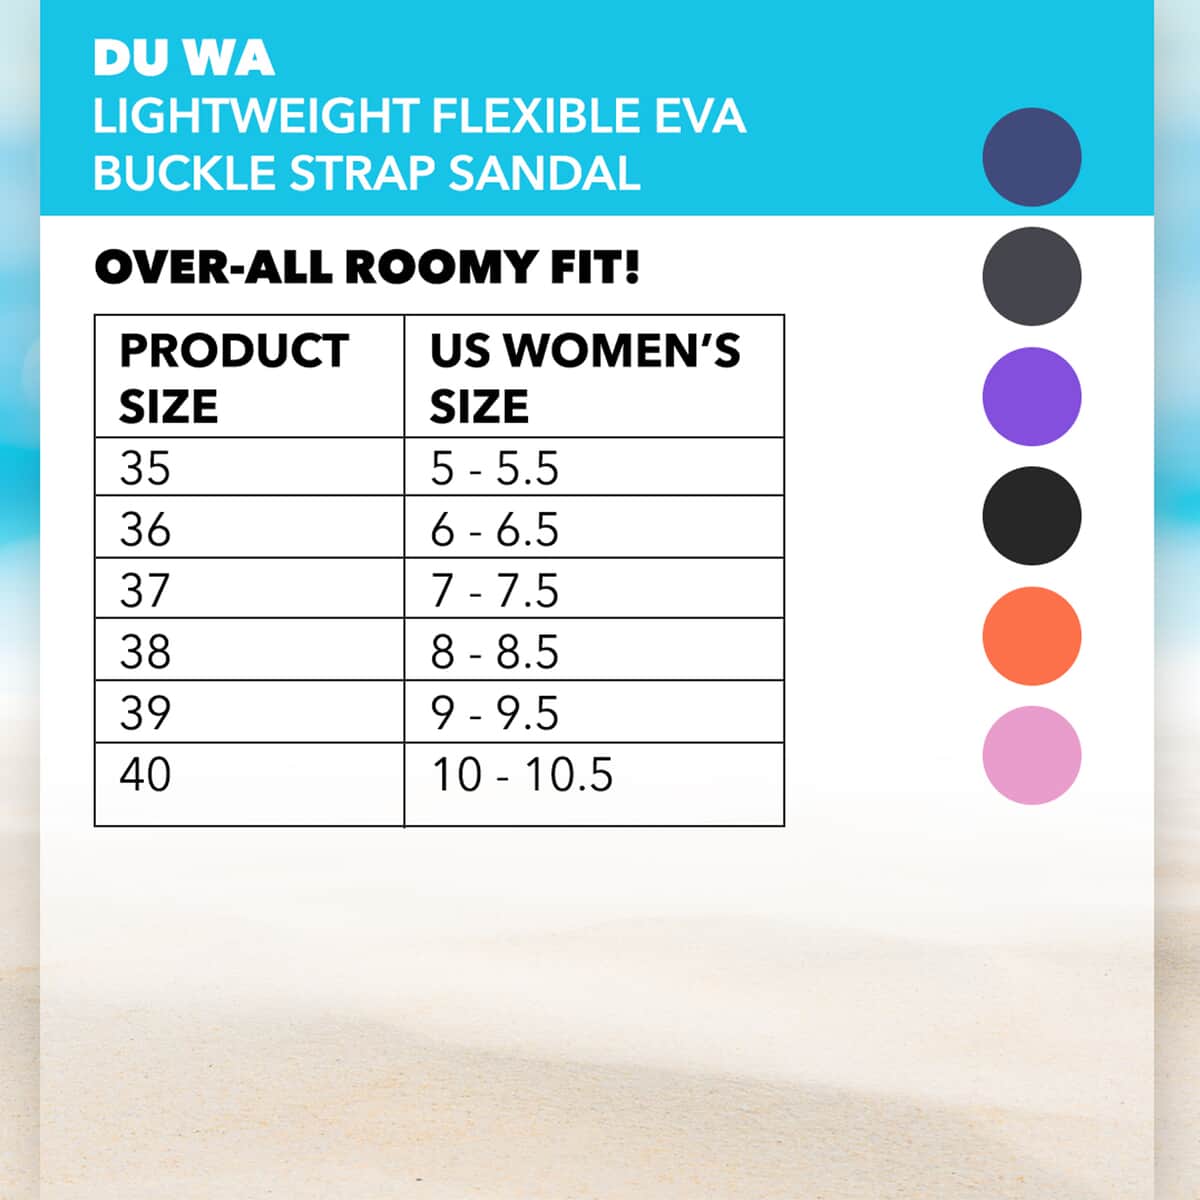 DU WA Orange Ultra Lightweight Flexible EVA Buckle Strap Sandal - Size 9-9.5 image number 1